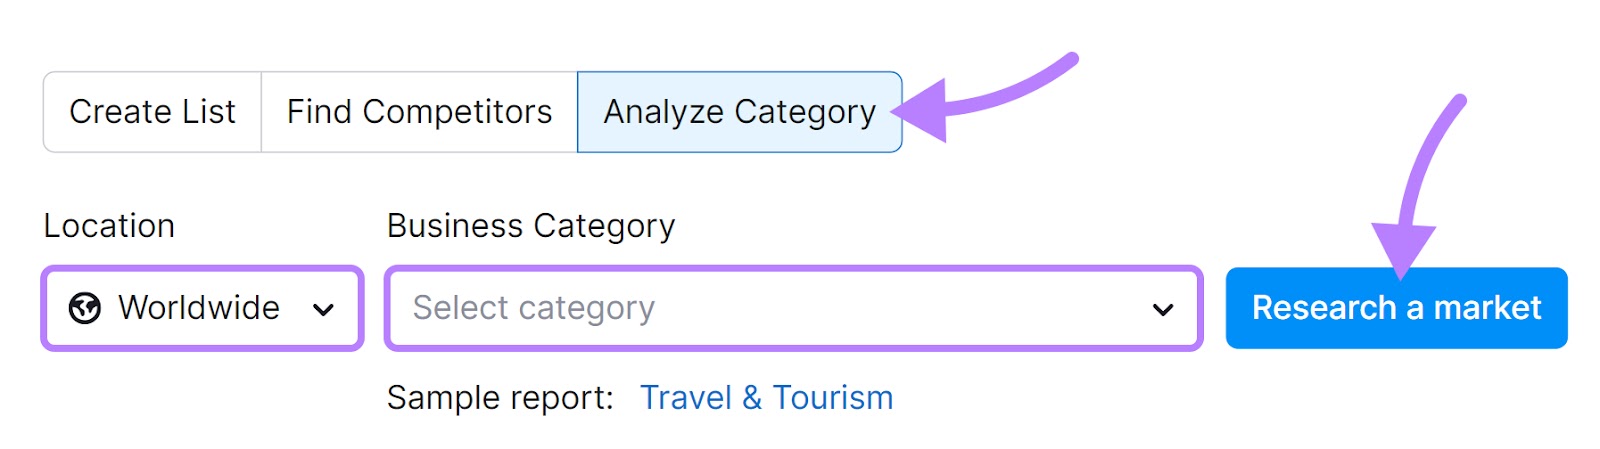 "Analyze Category" option in Market Explorer tool